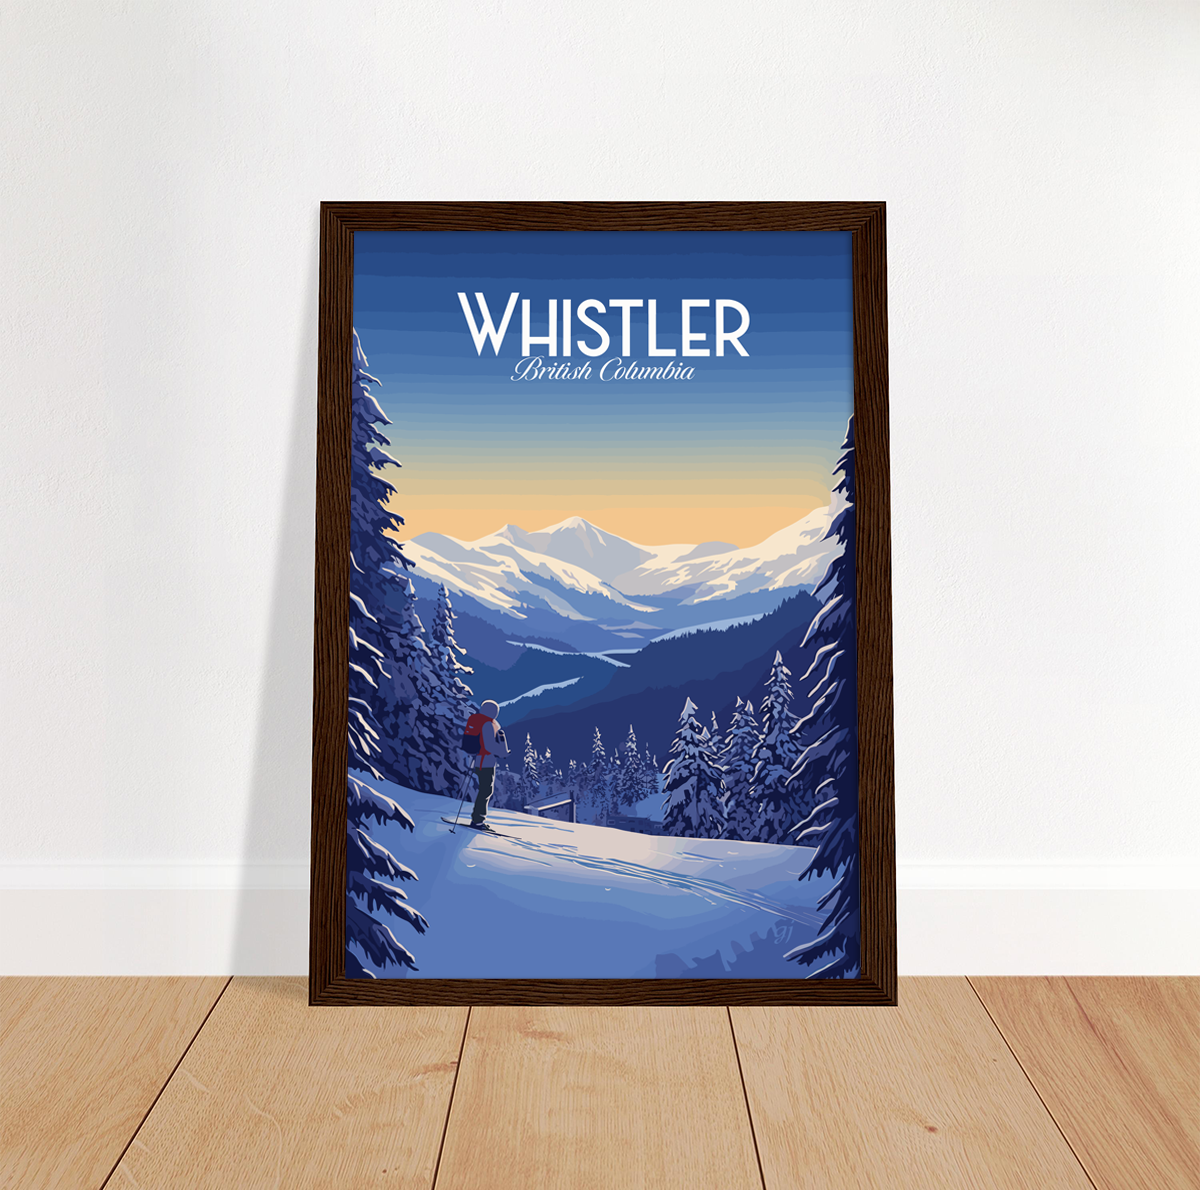 Whistler poster by bon voyage design